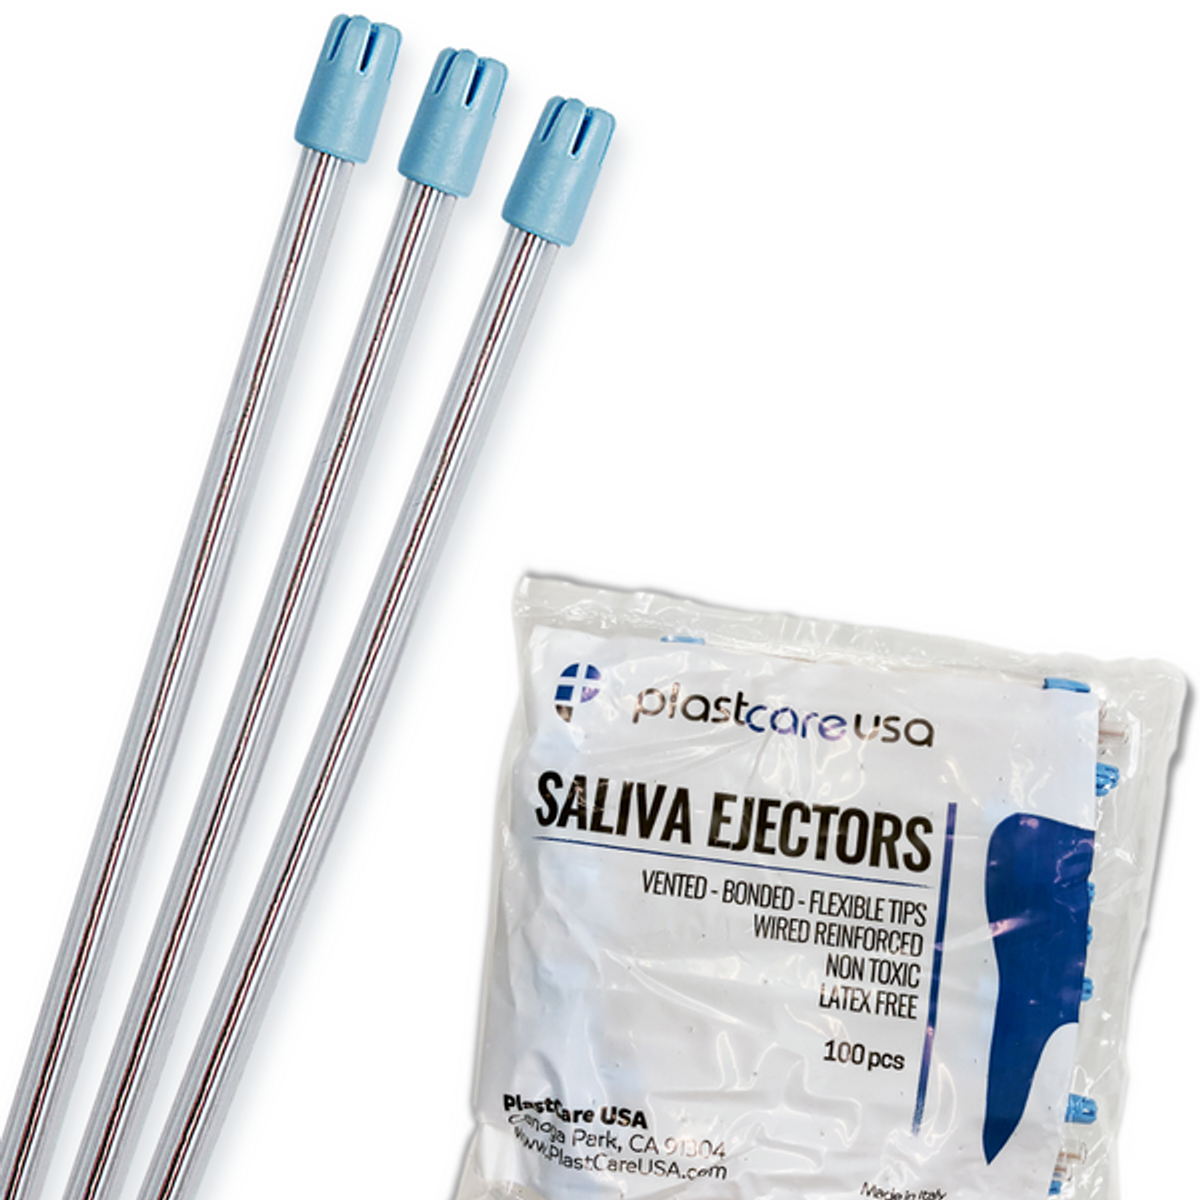 PlastCare Saliva Ejector, Clear Body, Blue Tip